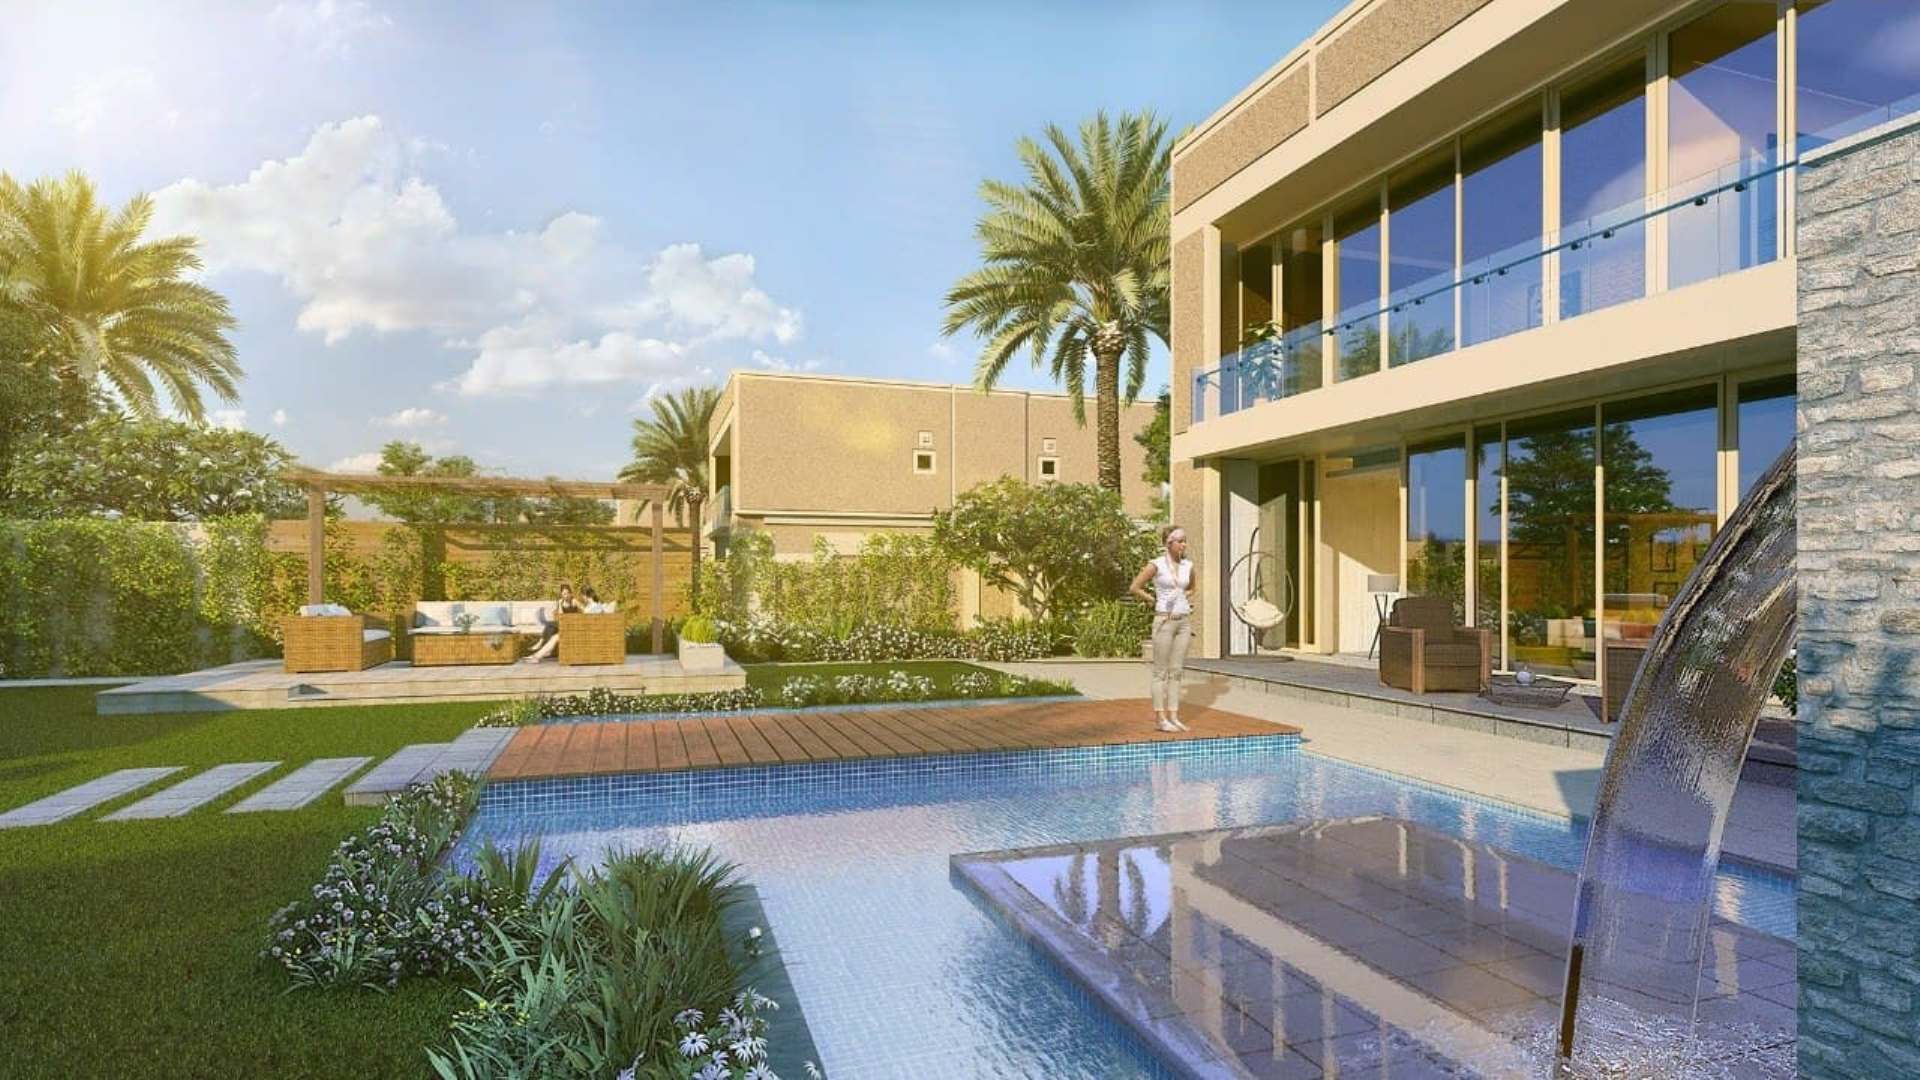 Villa for sale in Falcon City of Wonders, Dubai, UAE, 5 bedrooms, 298 m², No. 24866 – photo 1